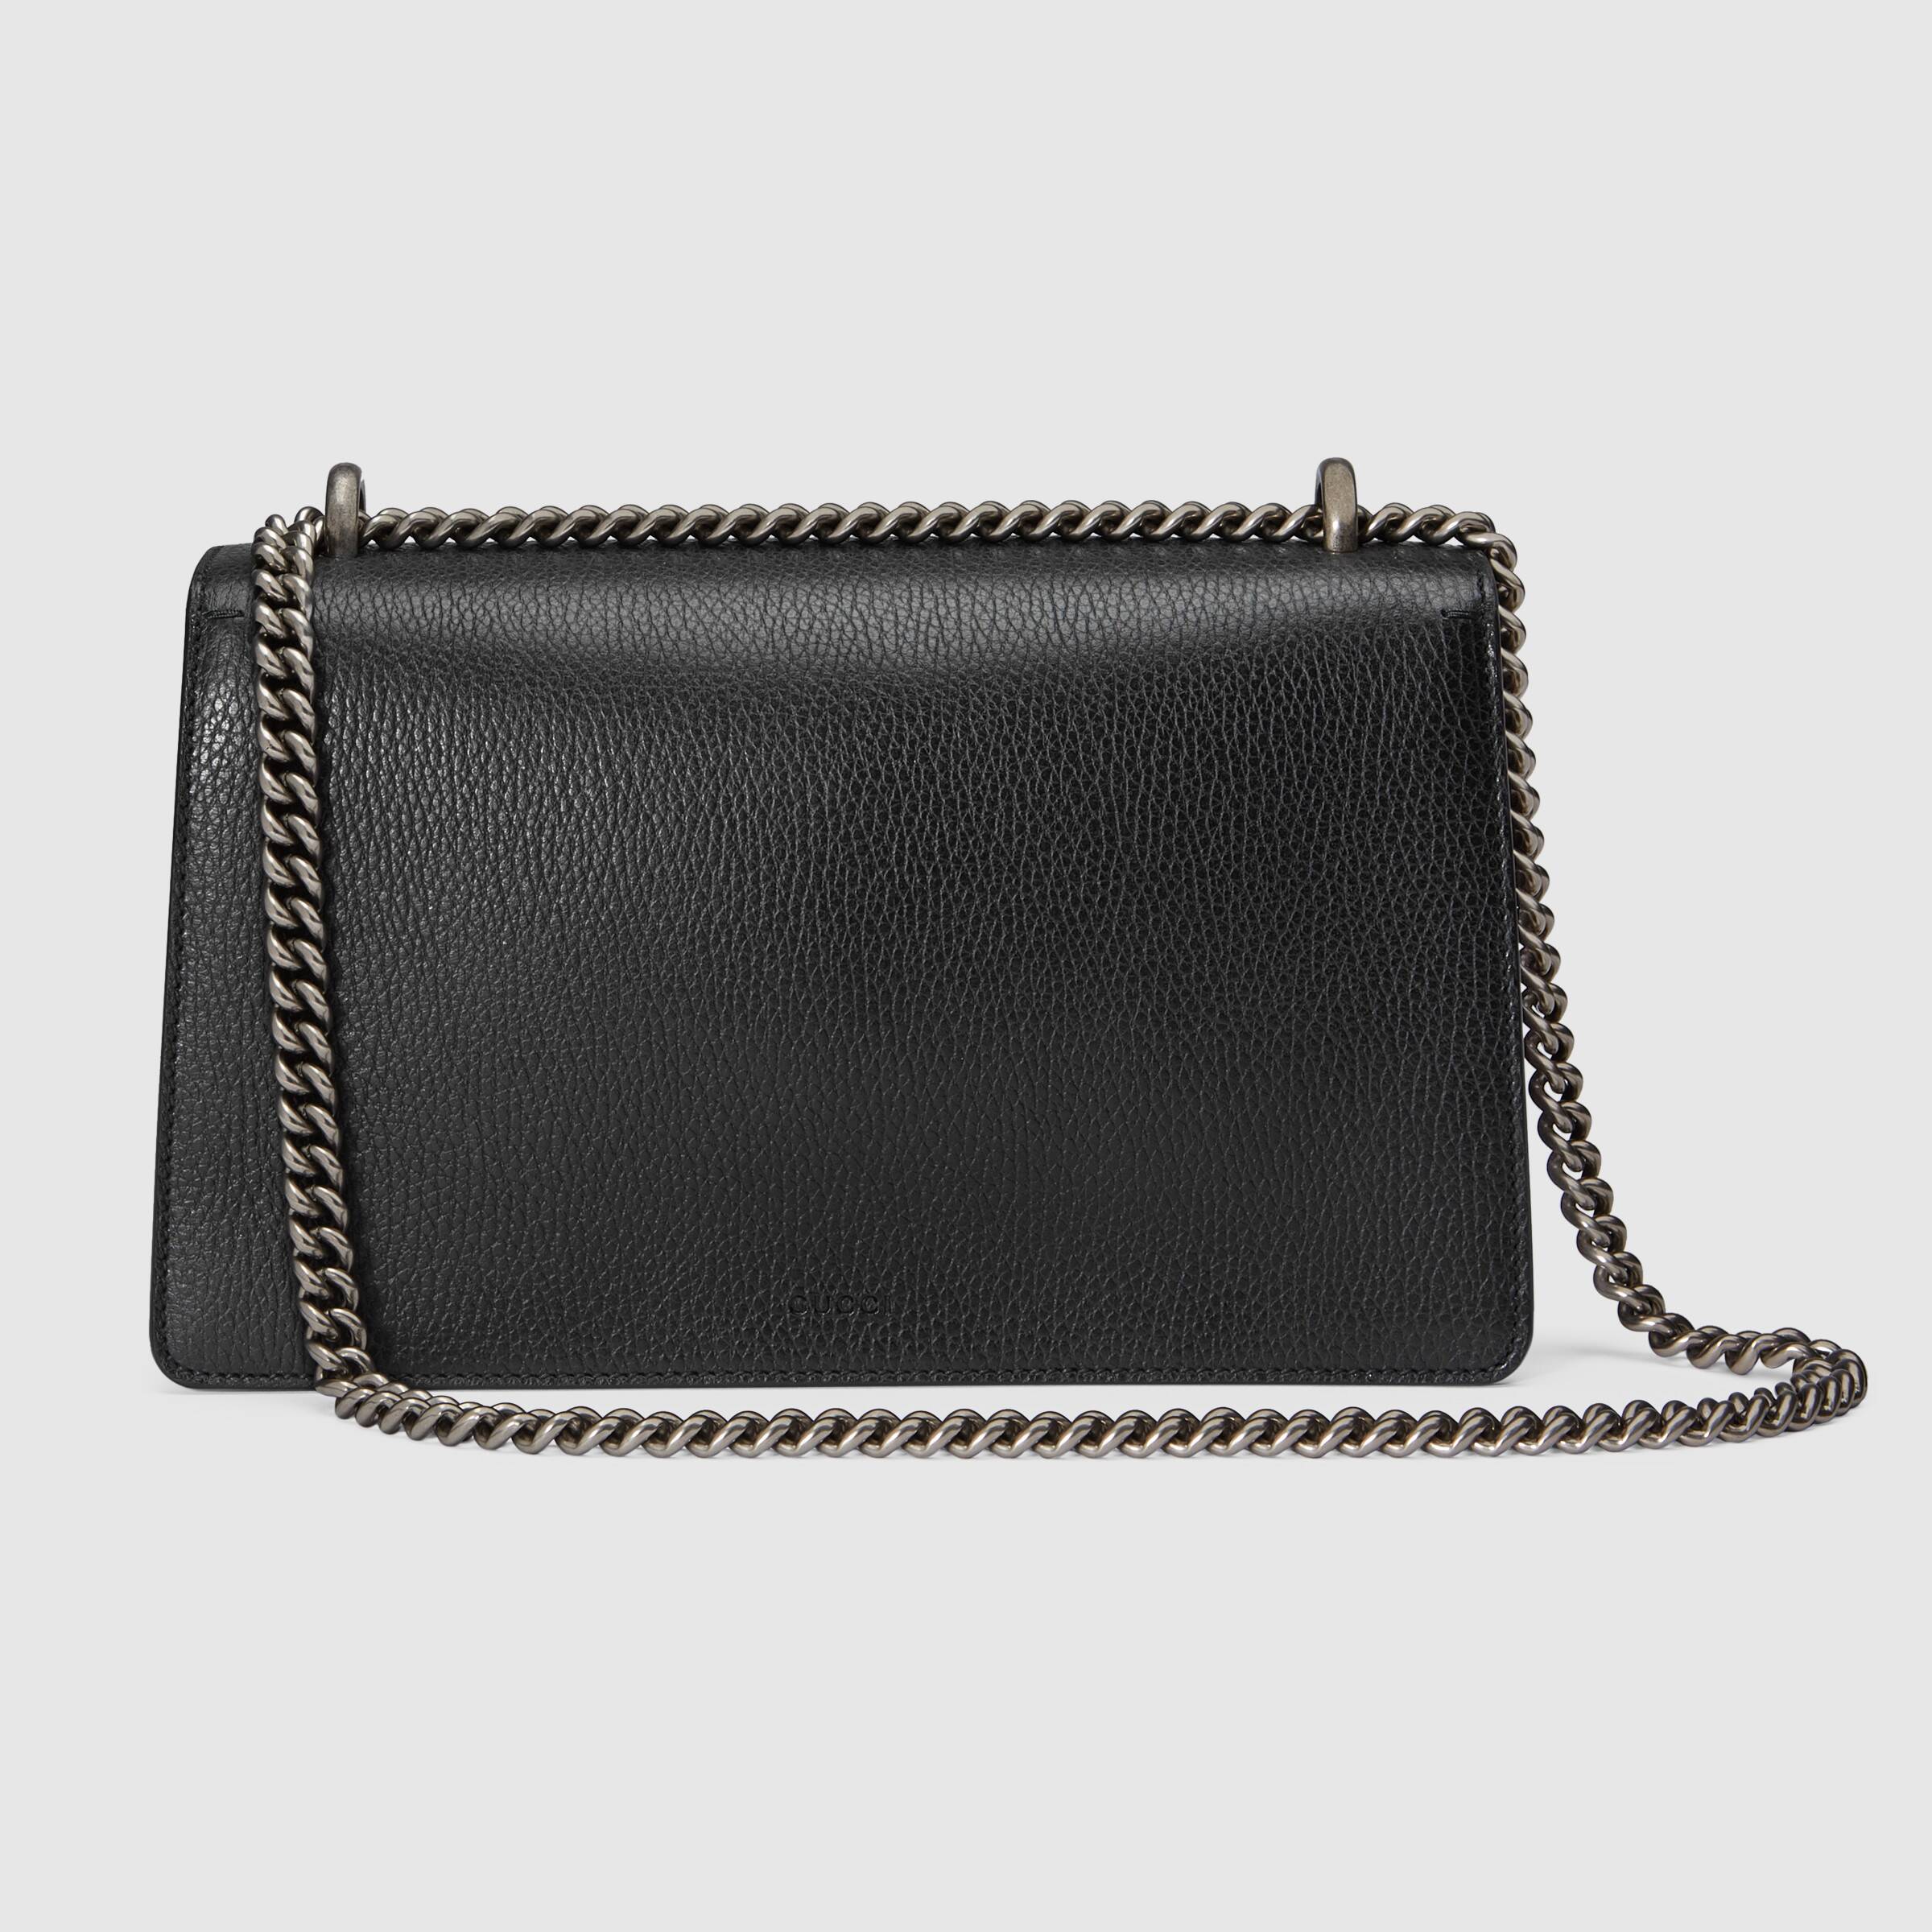 Gucci Dionysus Small Shoulder Bag Black Leather